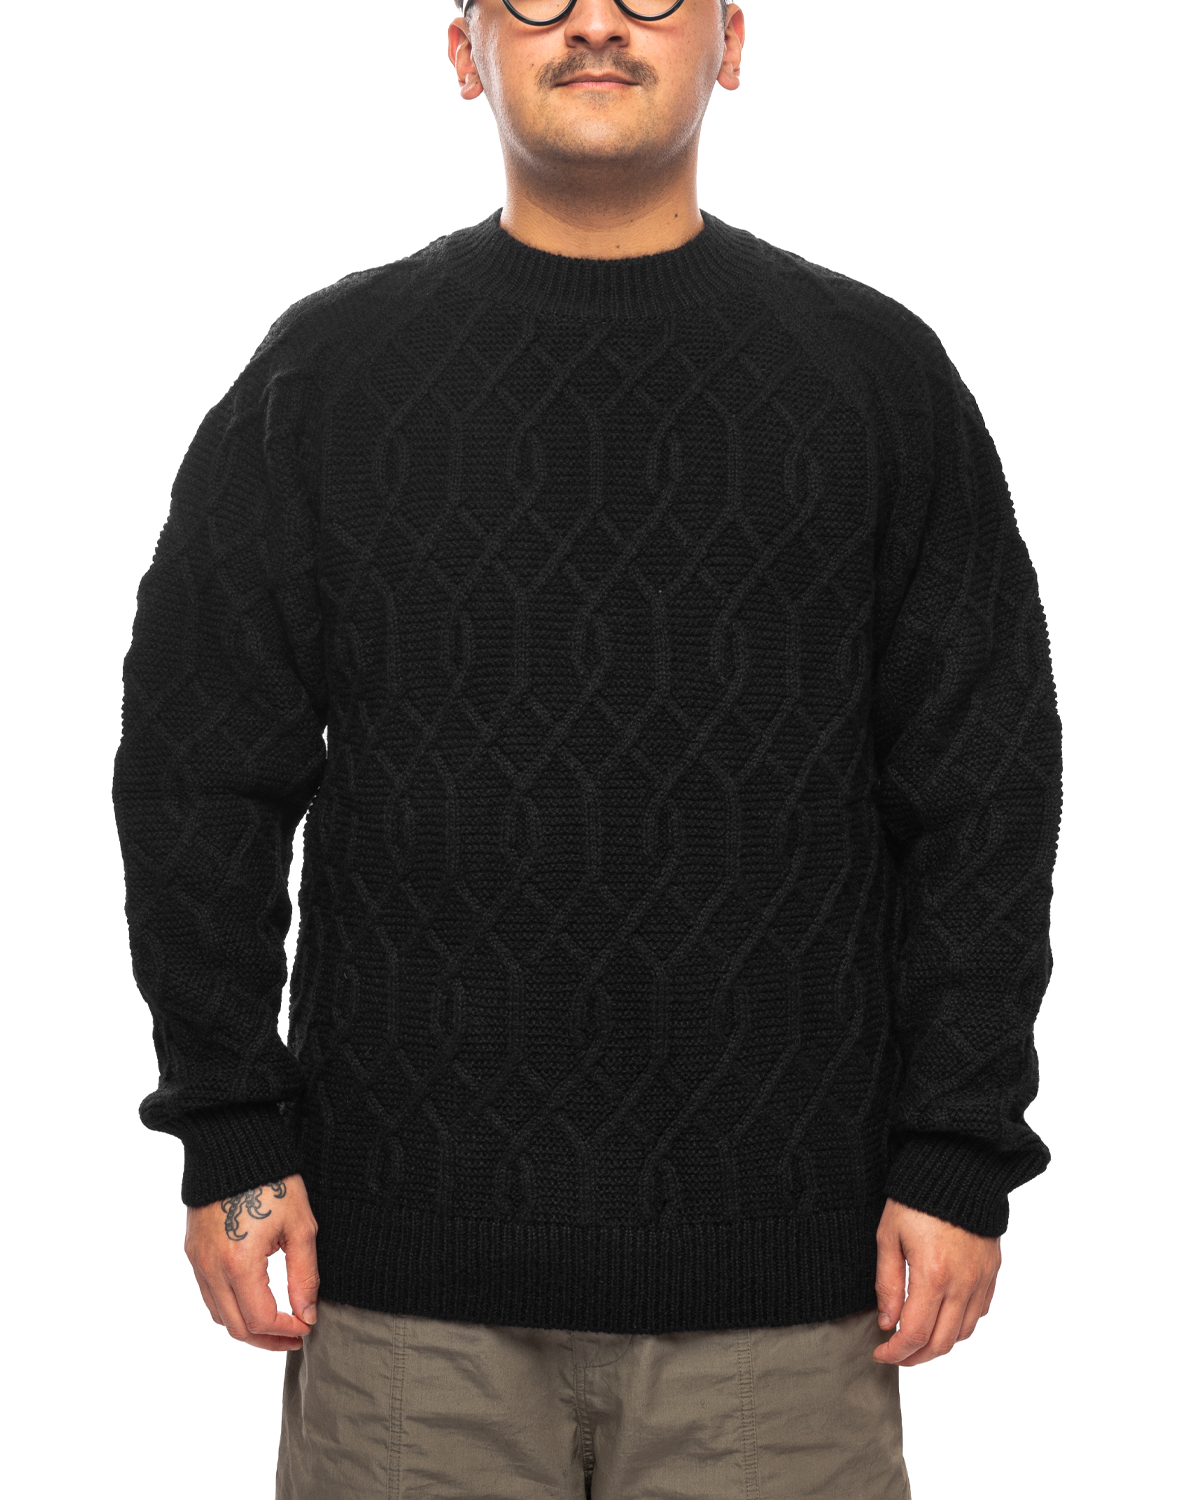 Men's Sweater Black HL-N009-051